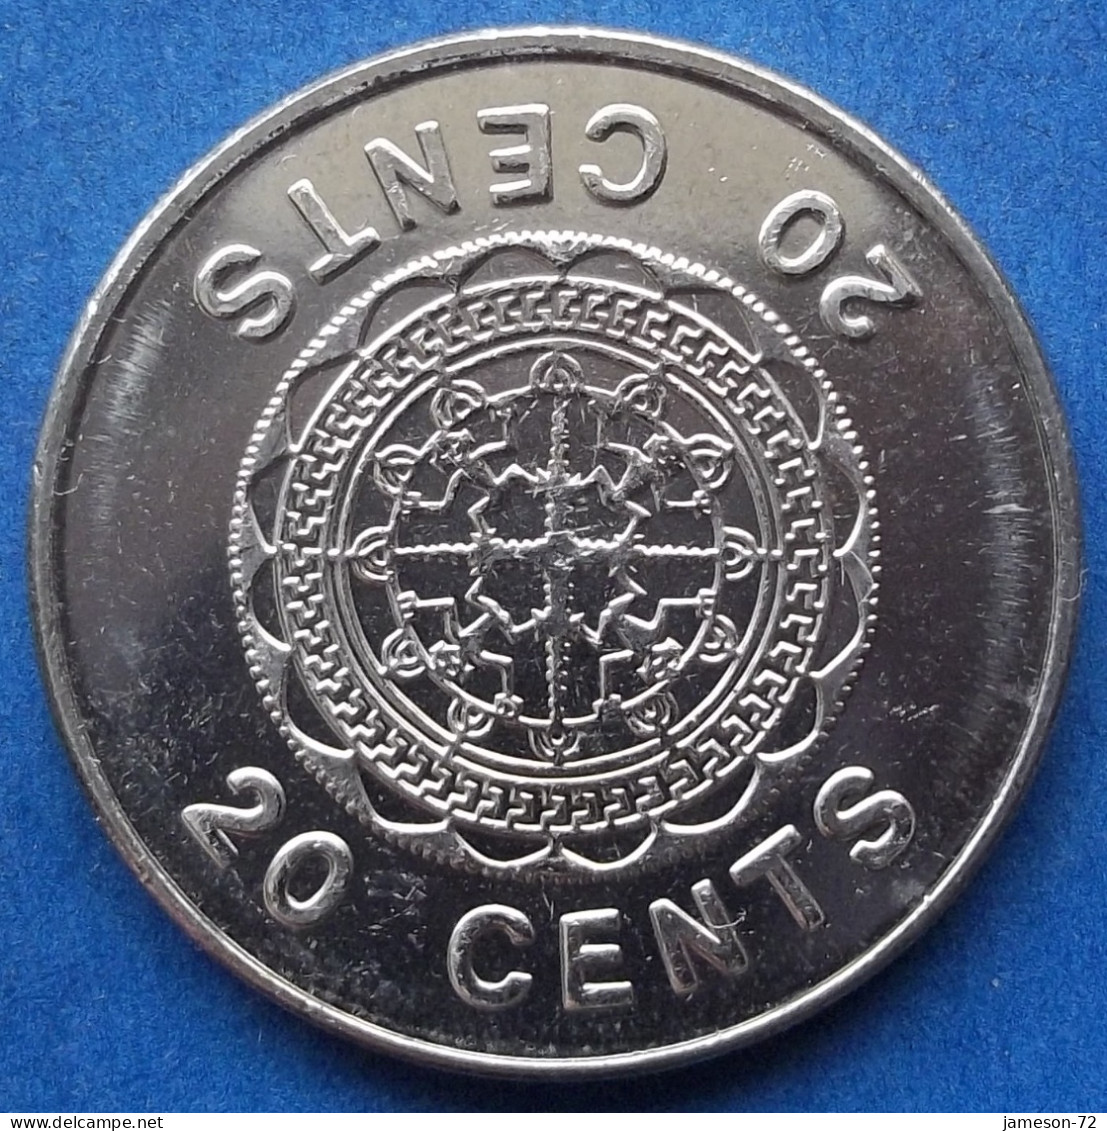 SOLOMON ISLANDS - 20 Censt 2005 "Malaita Pendant" KM# 28 Commonwealth Nation, Elizabeth II - Edelweiss Coins - Salomon